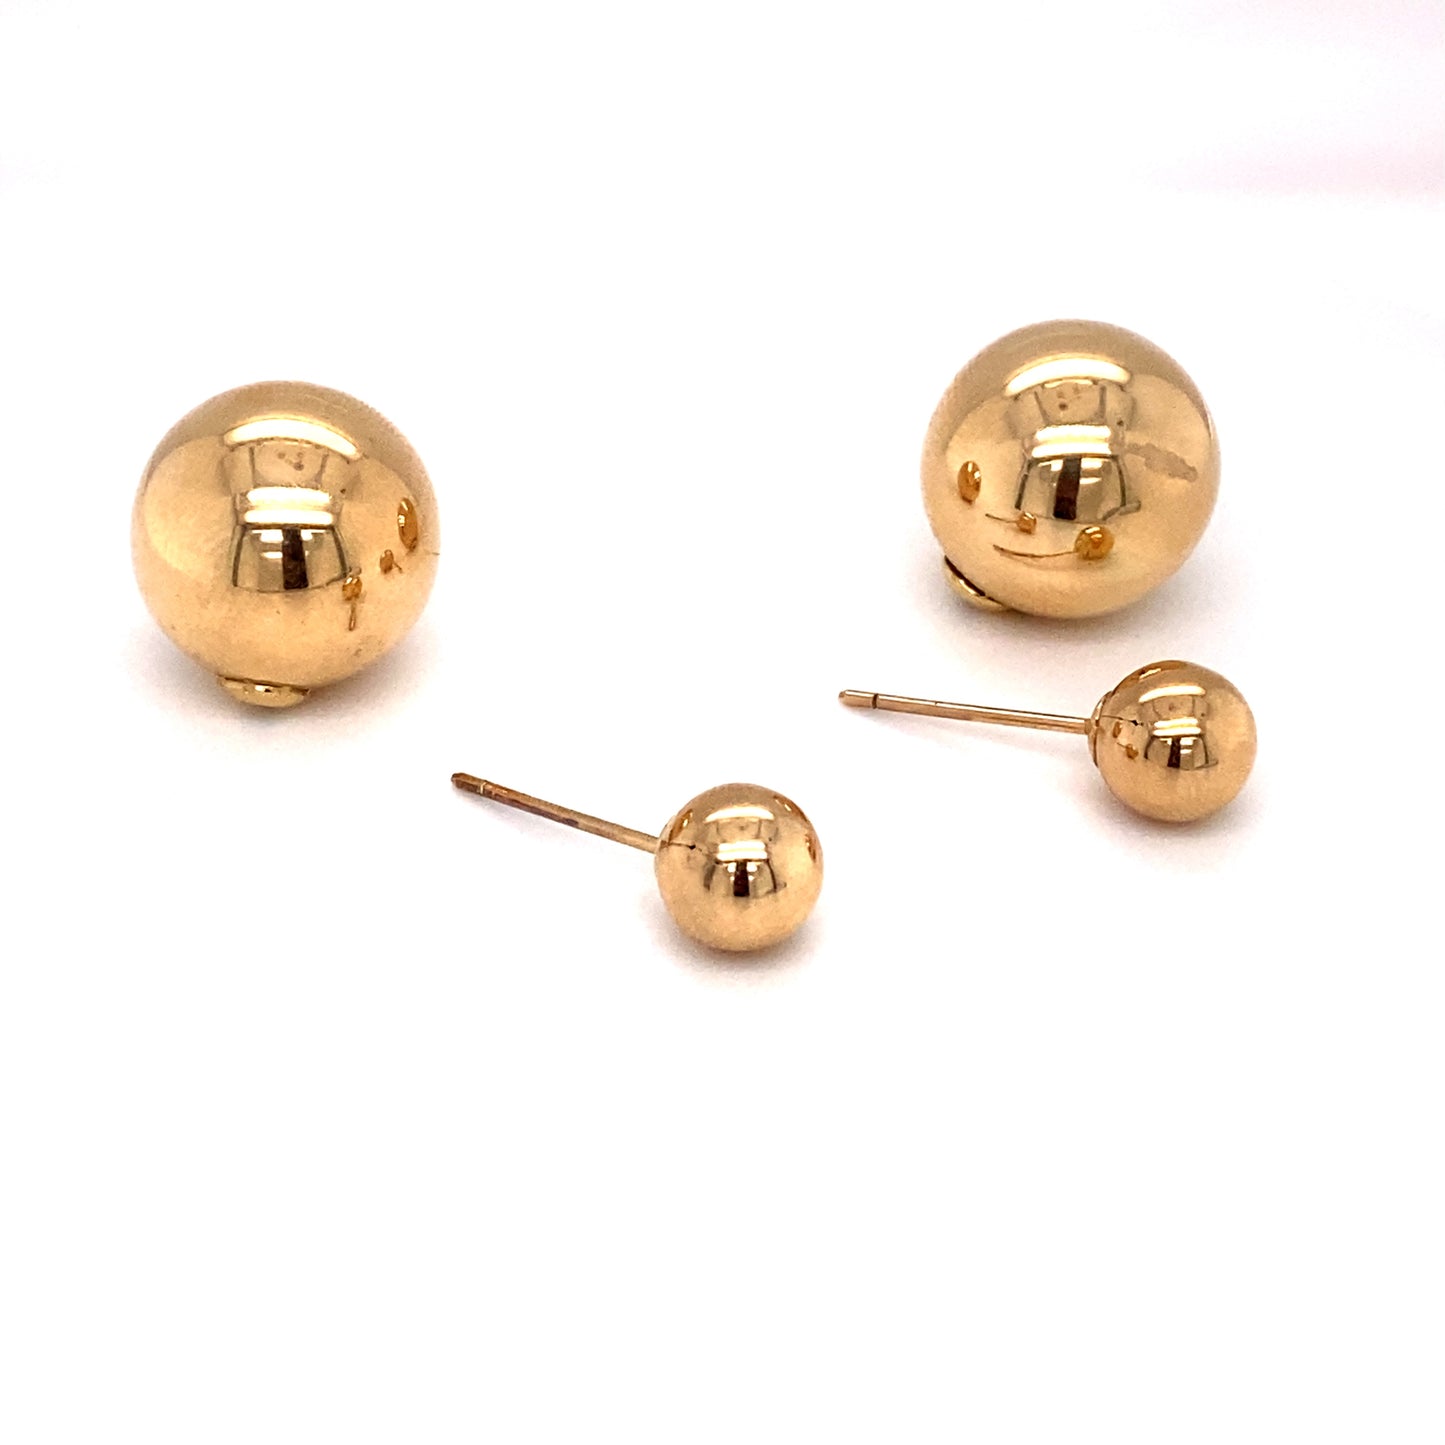 Circa 1950 Italian Double Ball Post Earrings in 14K Gold